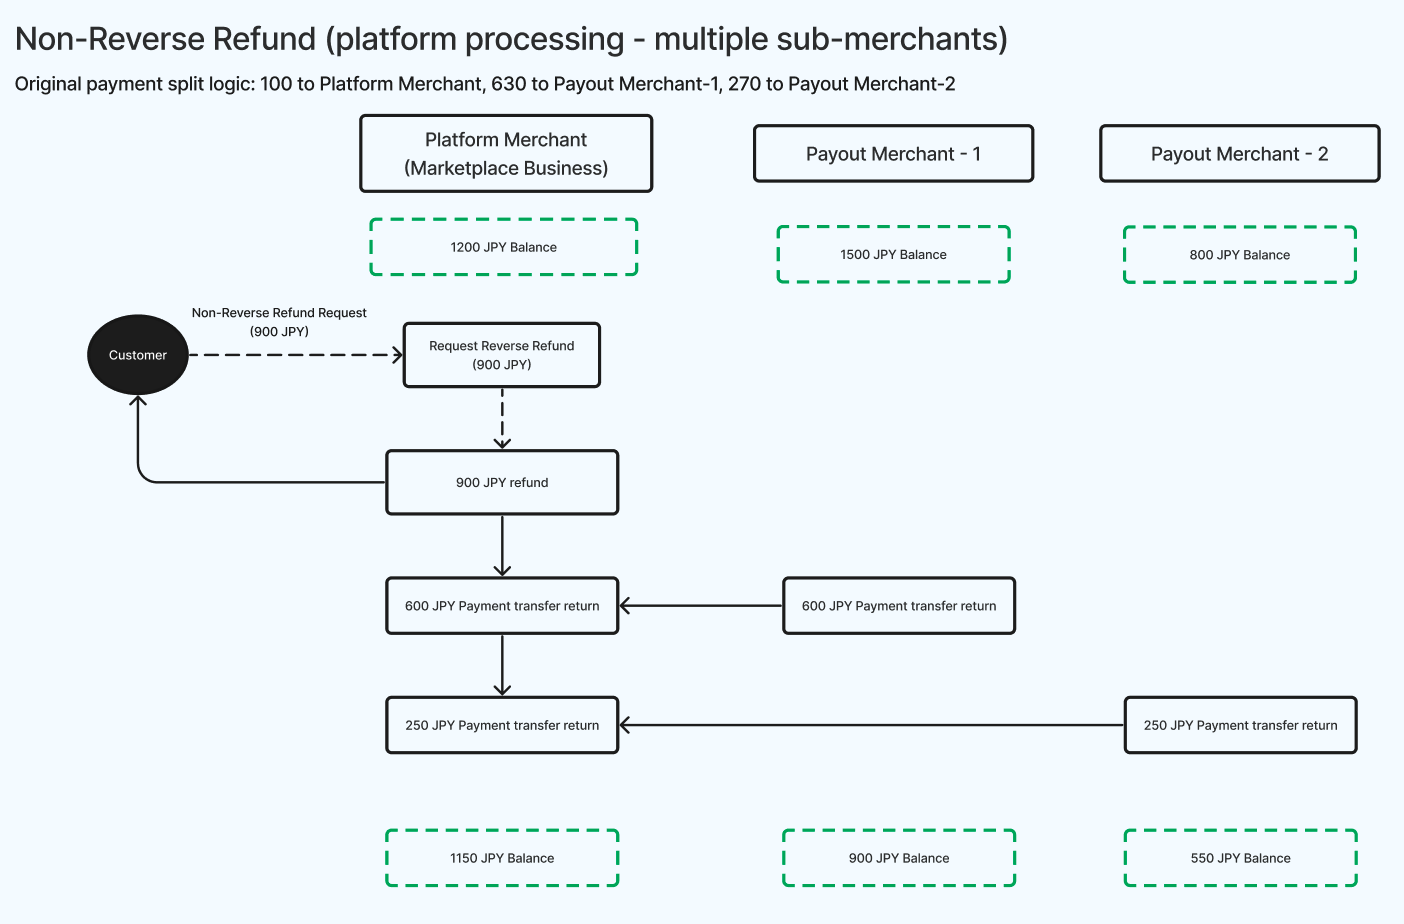 Non-Reverse Refund (platform processing - multiple sub-merchants)